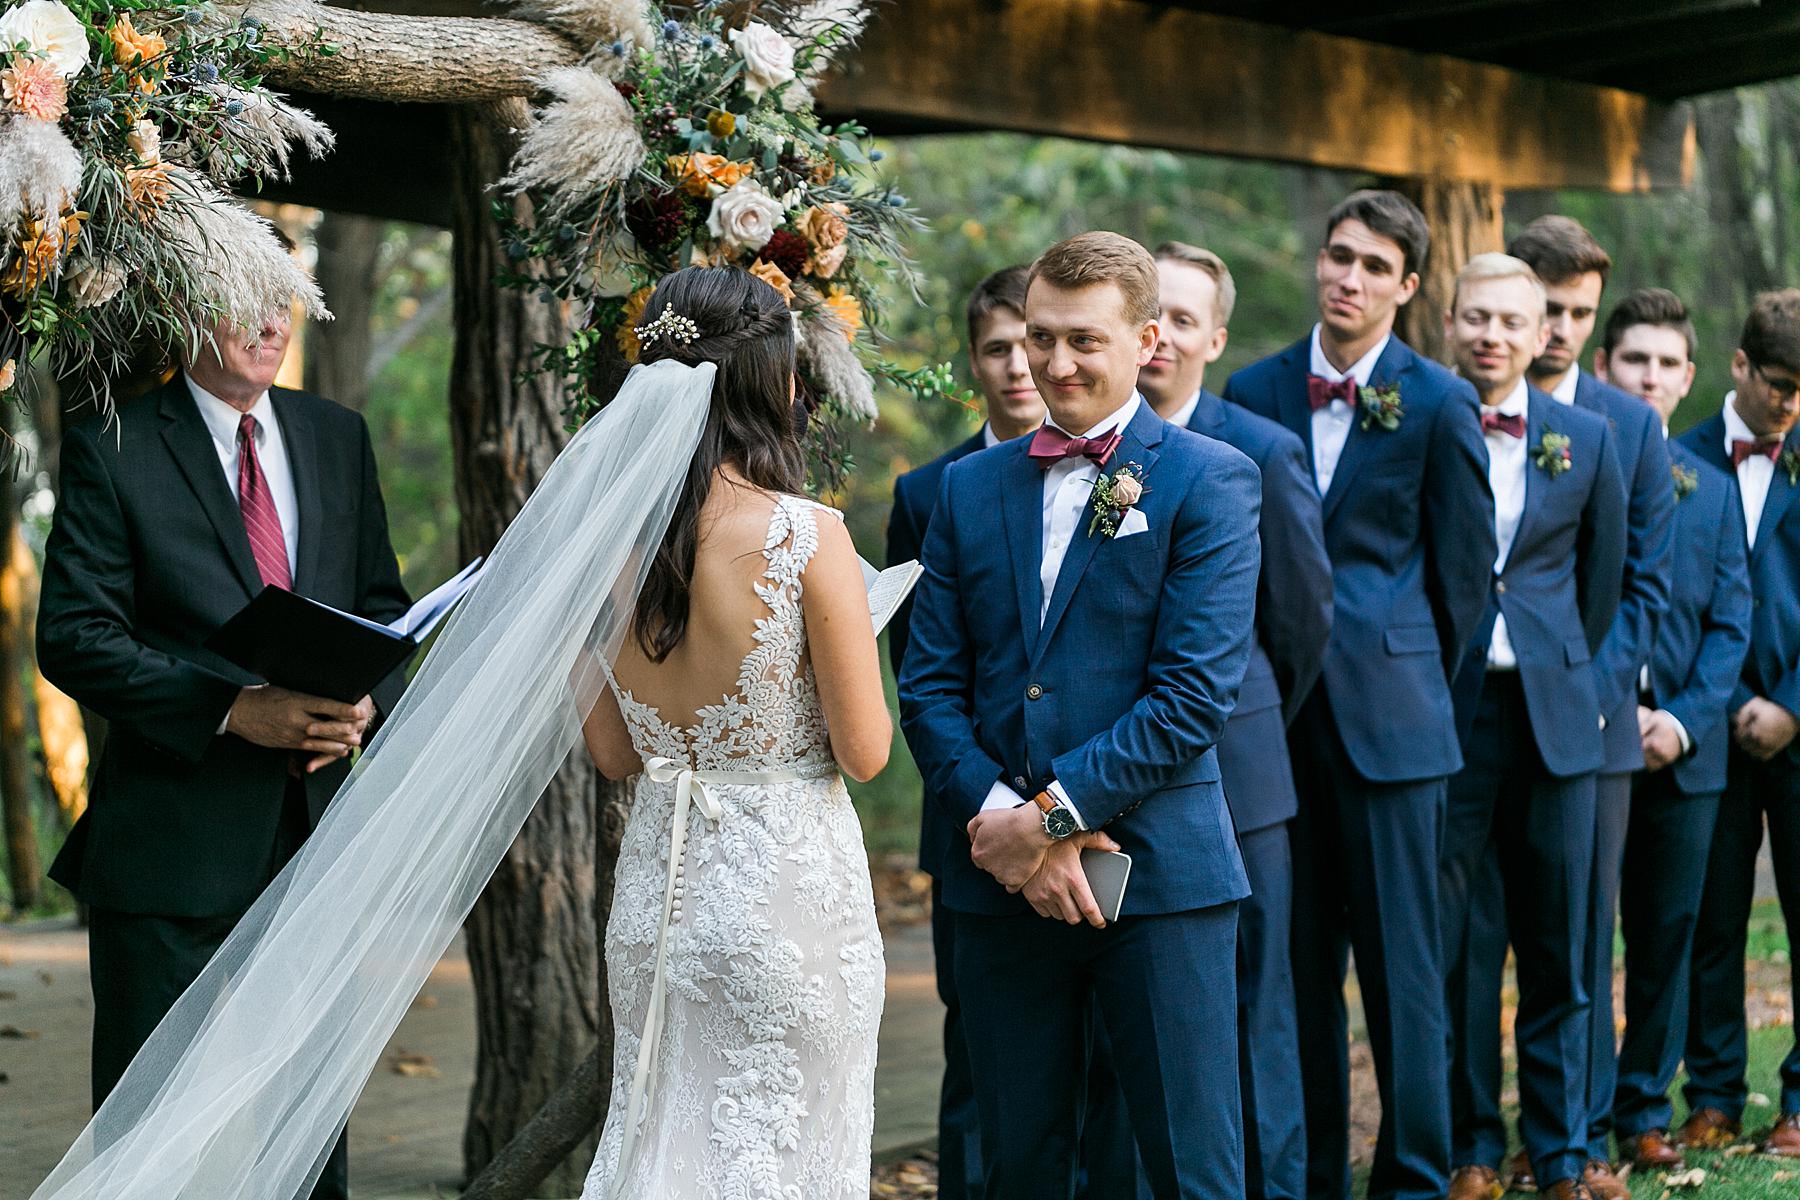 fall outdoor wedding ceremony at schlitz audubon nature center in milwaukee, wi